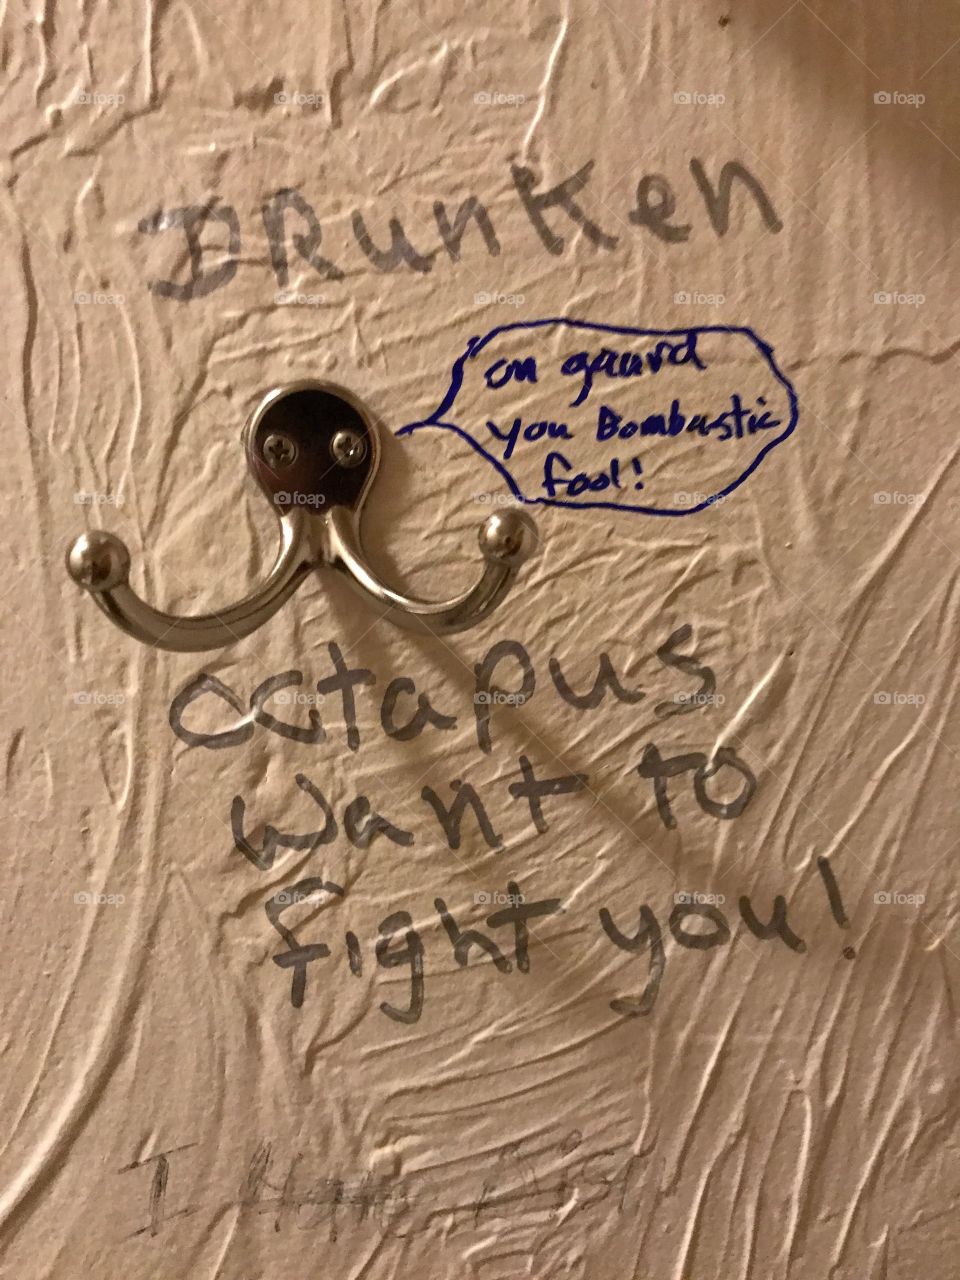 Bar bathroom graffiti